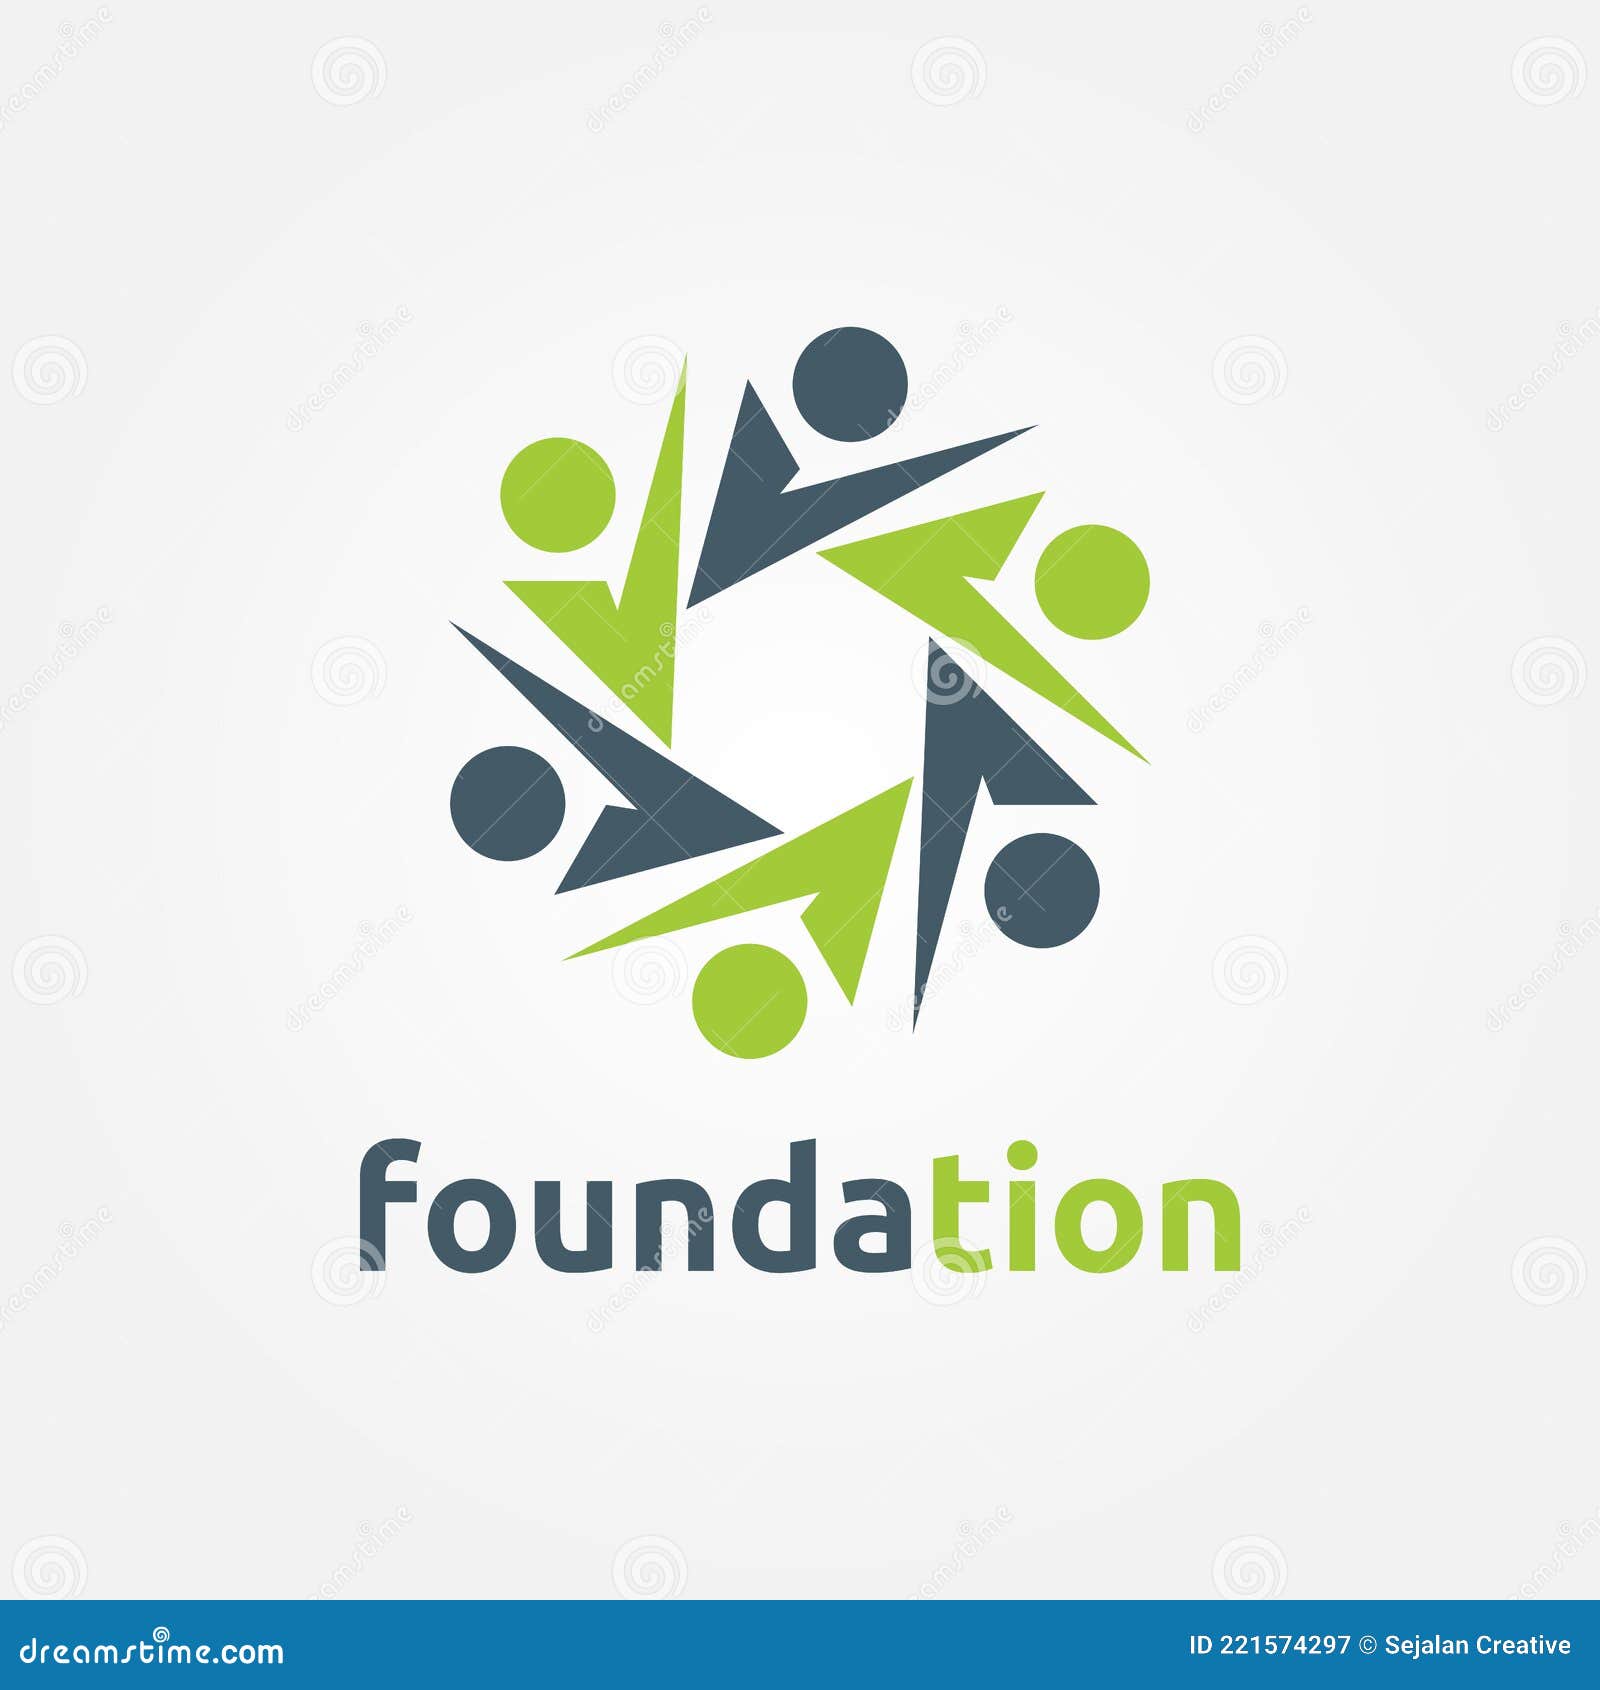 foundation logo ideas 10